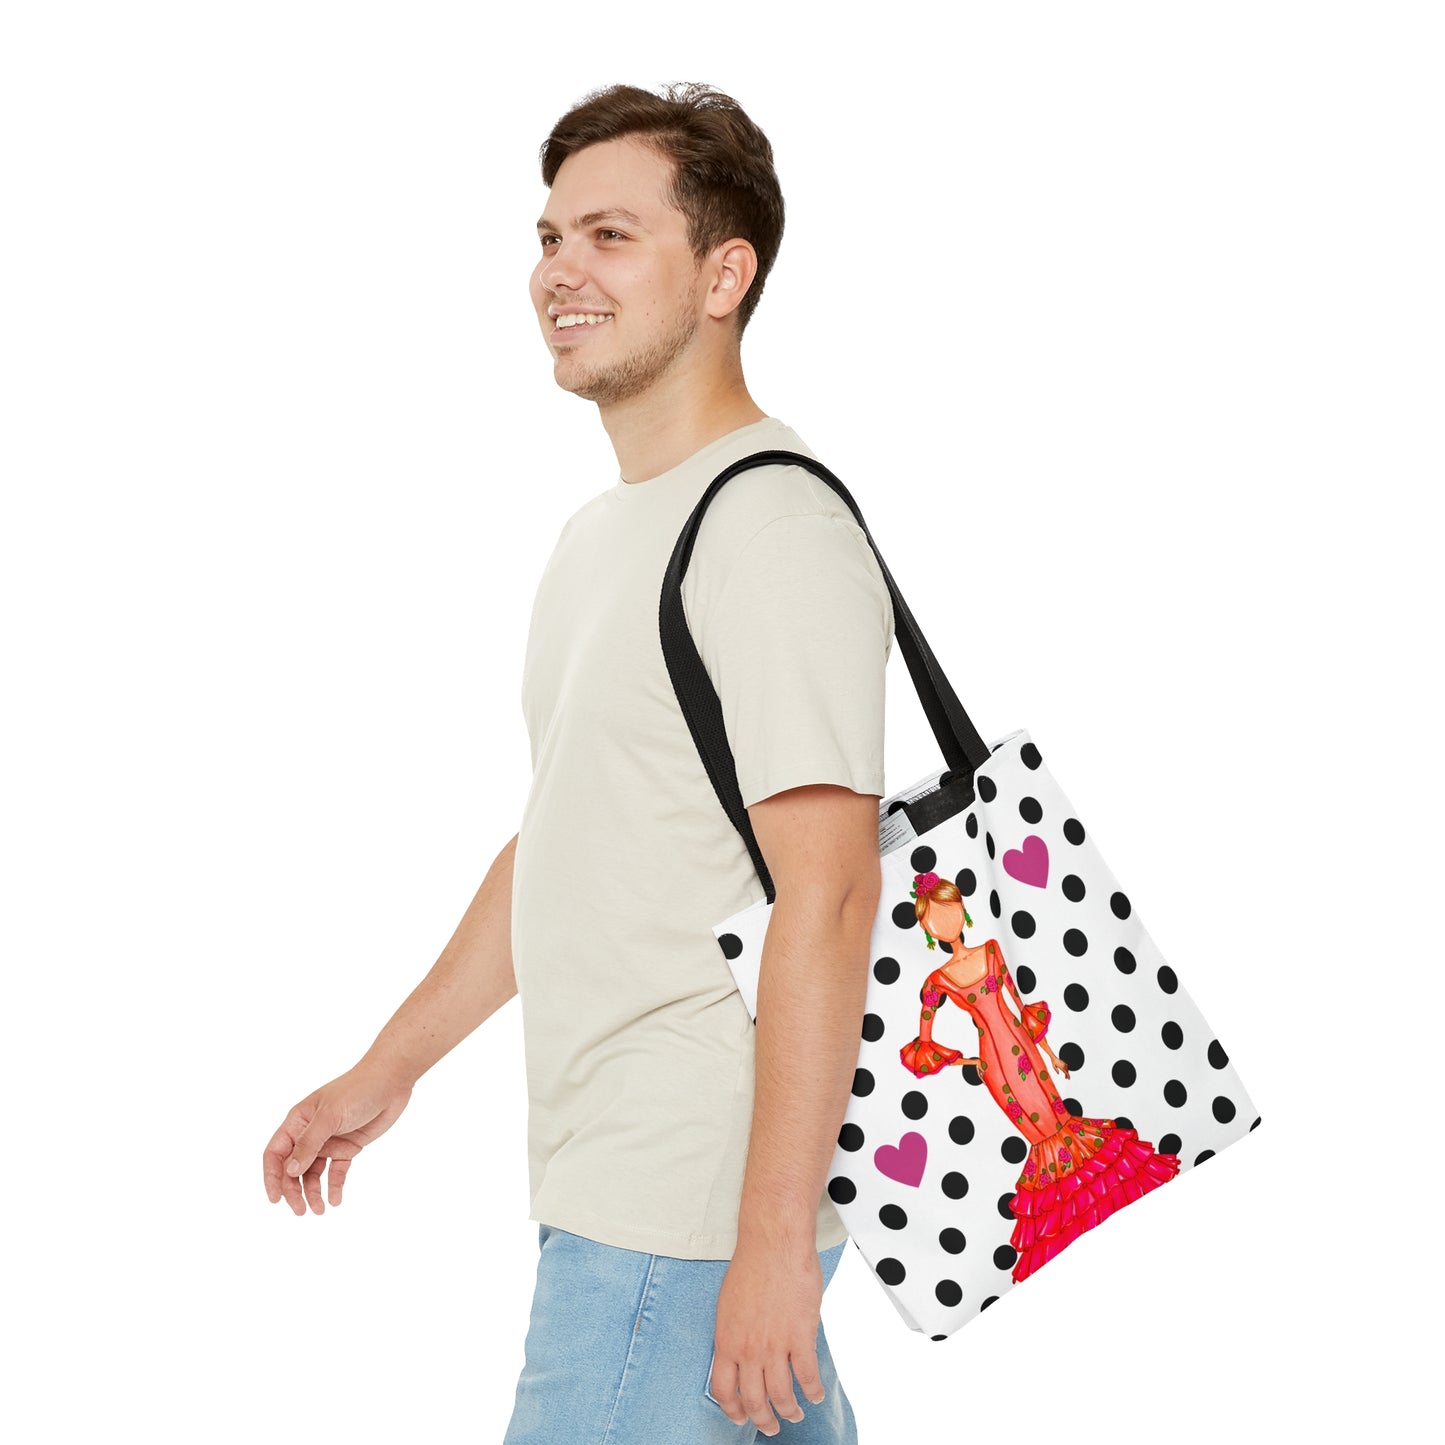 a man walking with a polka dot bag on his shoulder